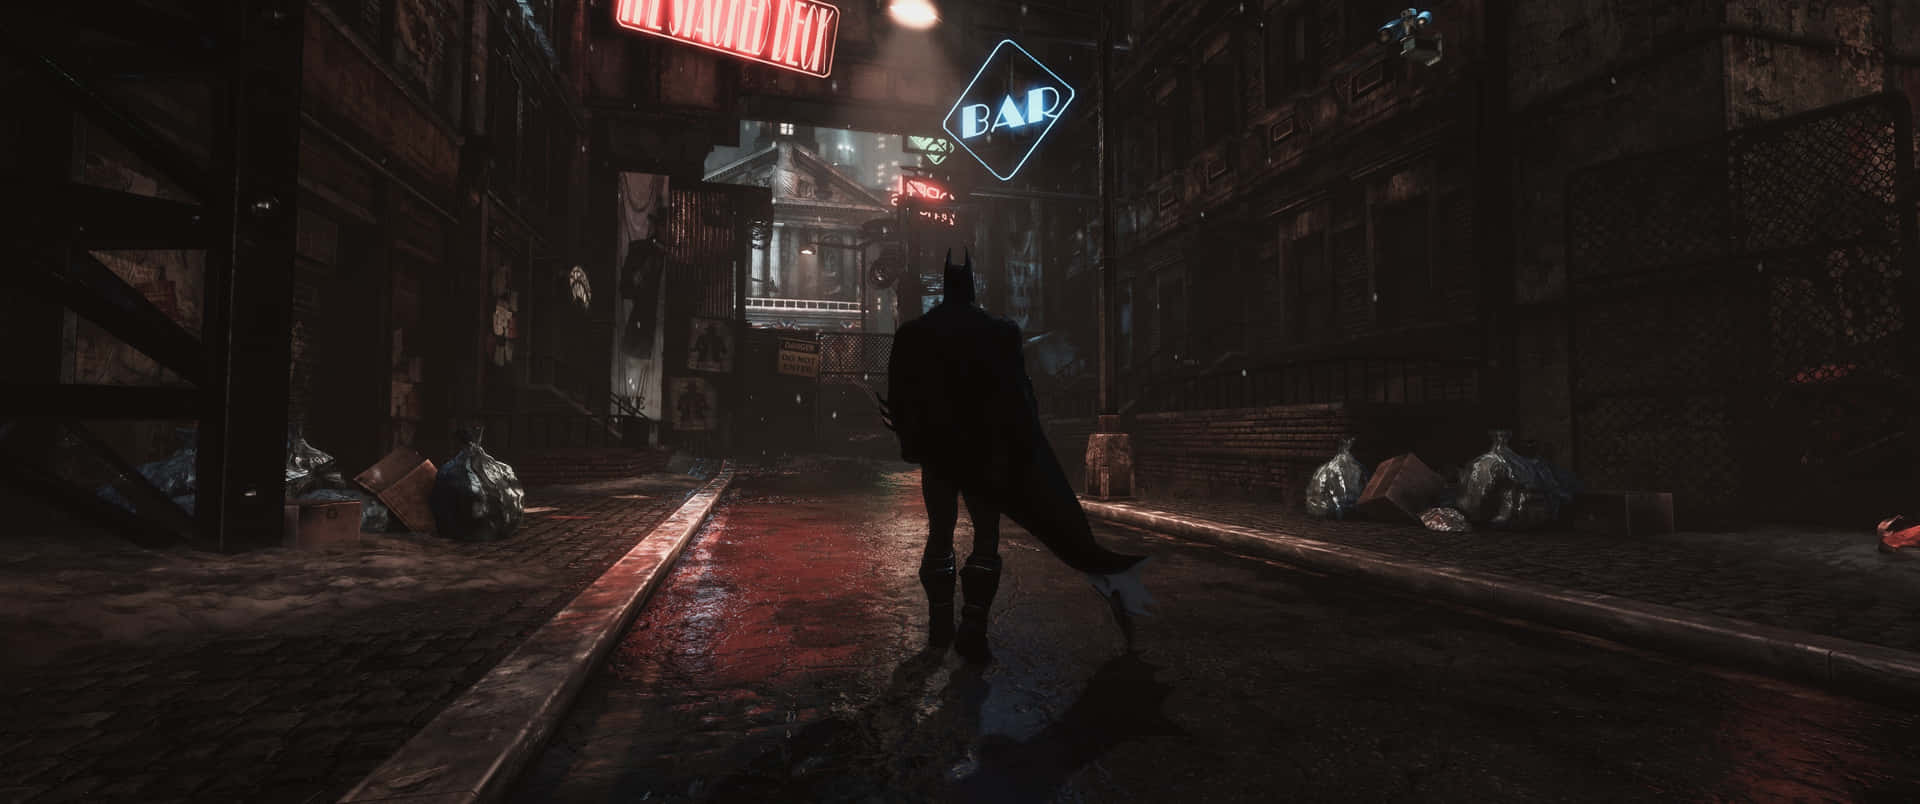 3440x1440p Batman Arkham Knight Background